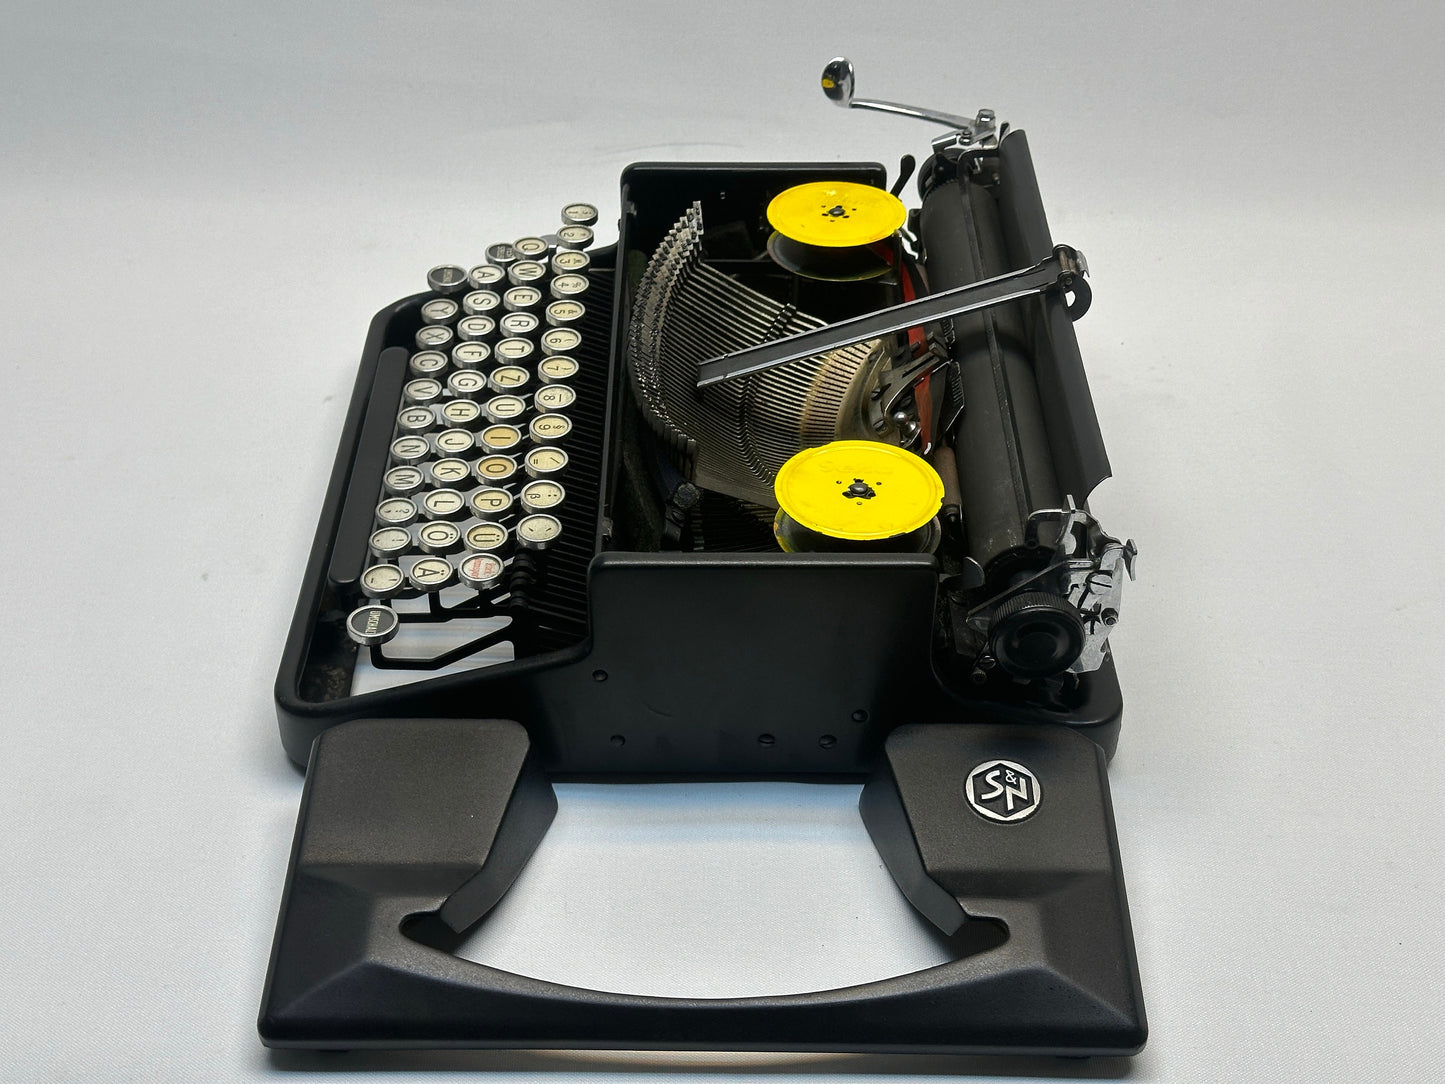 Erika Typewriter Model 5 - Vintage Black Charm, Crafted from 1955 Onward, Premium Quality, Antique Elegance - A Timeless Gift